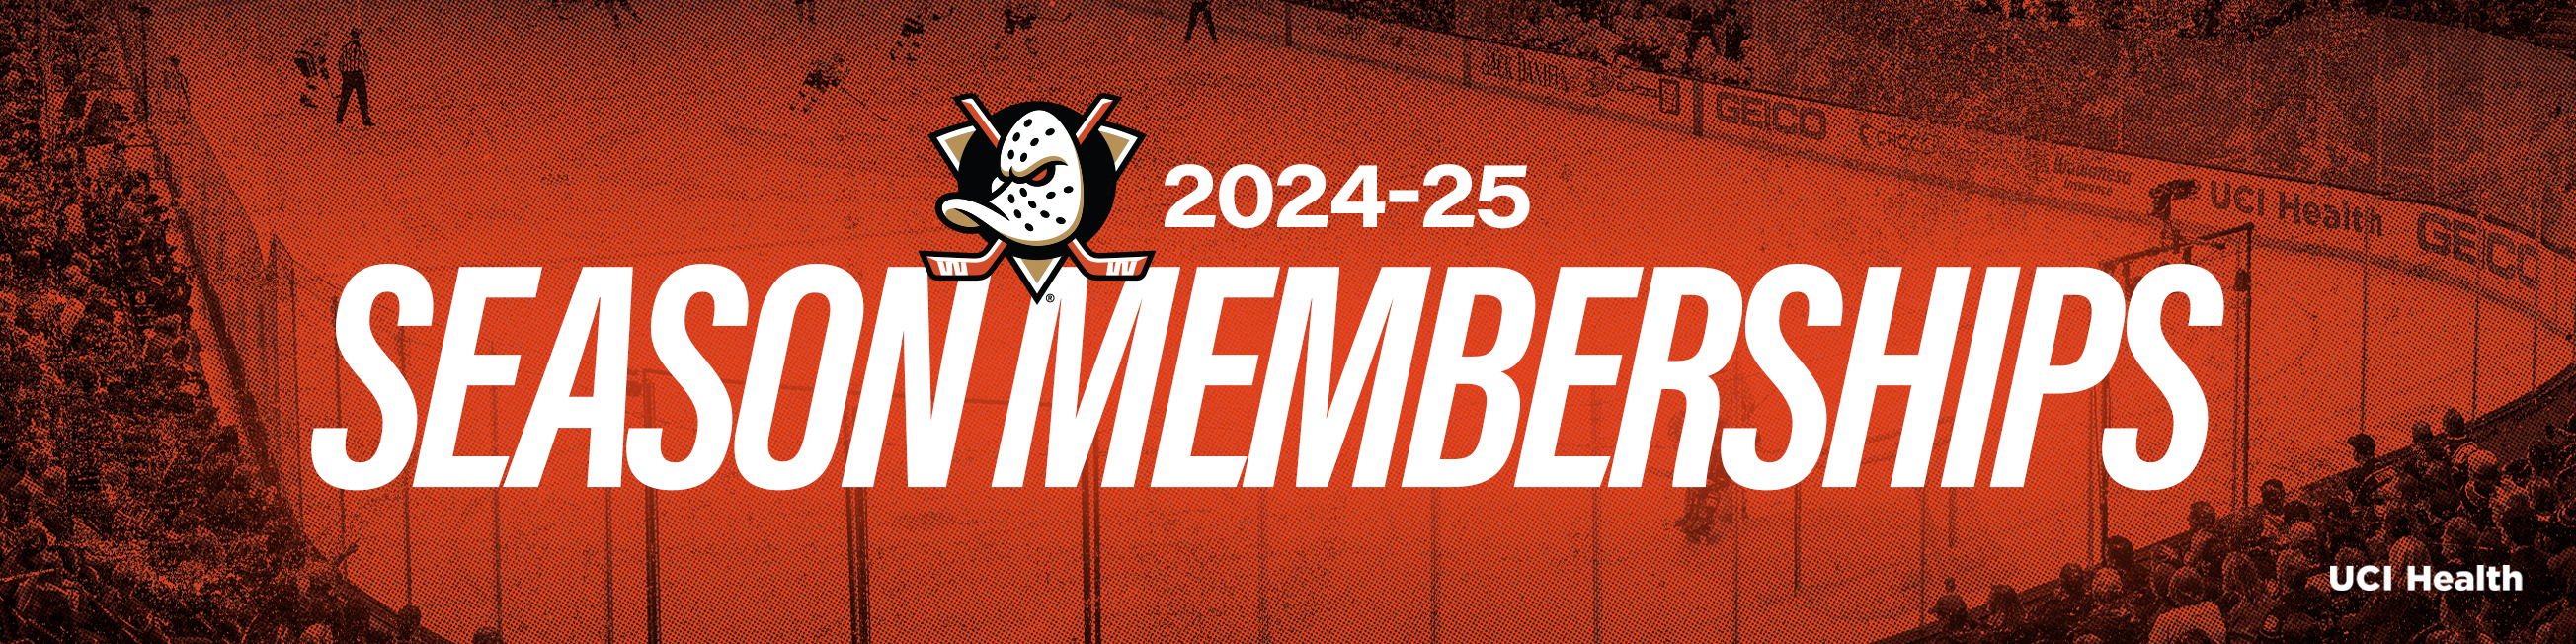 Anaheim Ducks Orange Alliance 2024–25 season presented by UCI Health ticket memberships header image